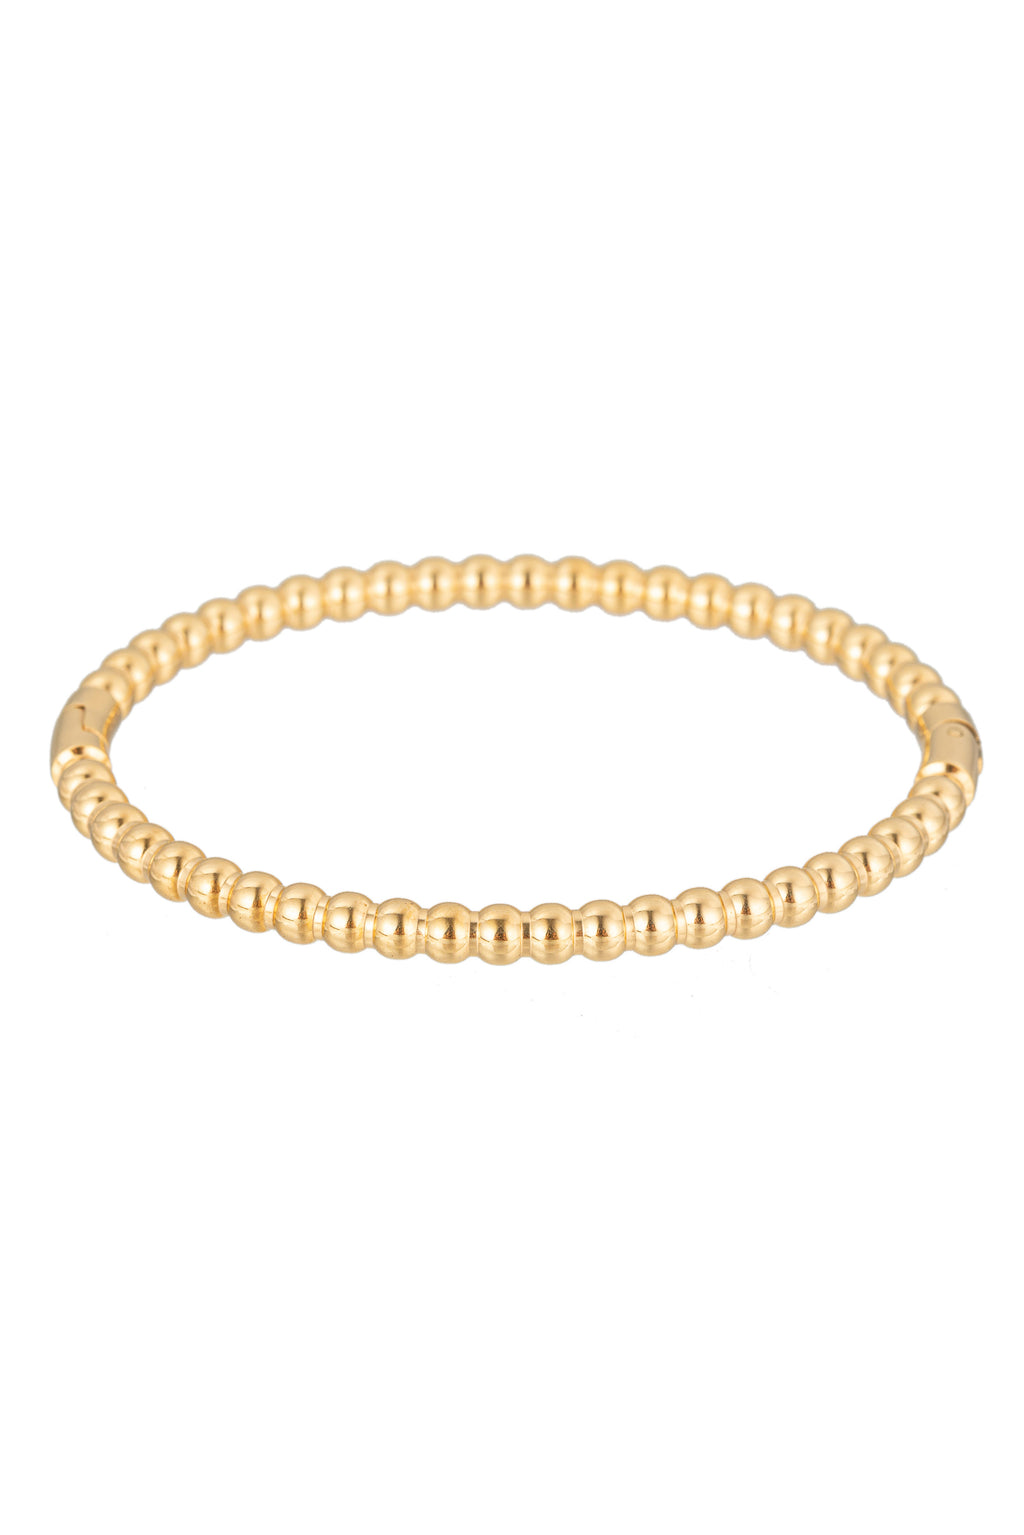 Gold tone titanium beaded bracelet.